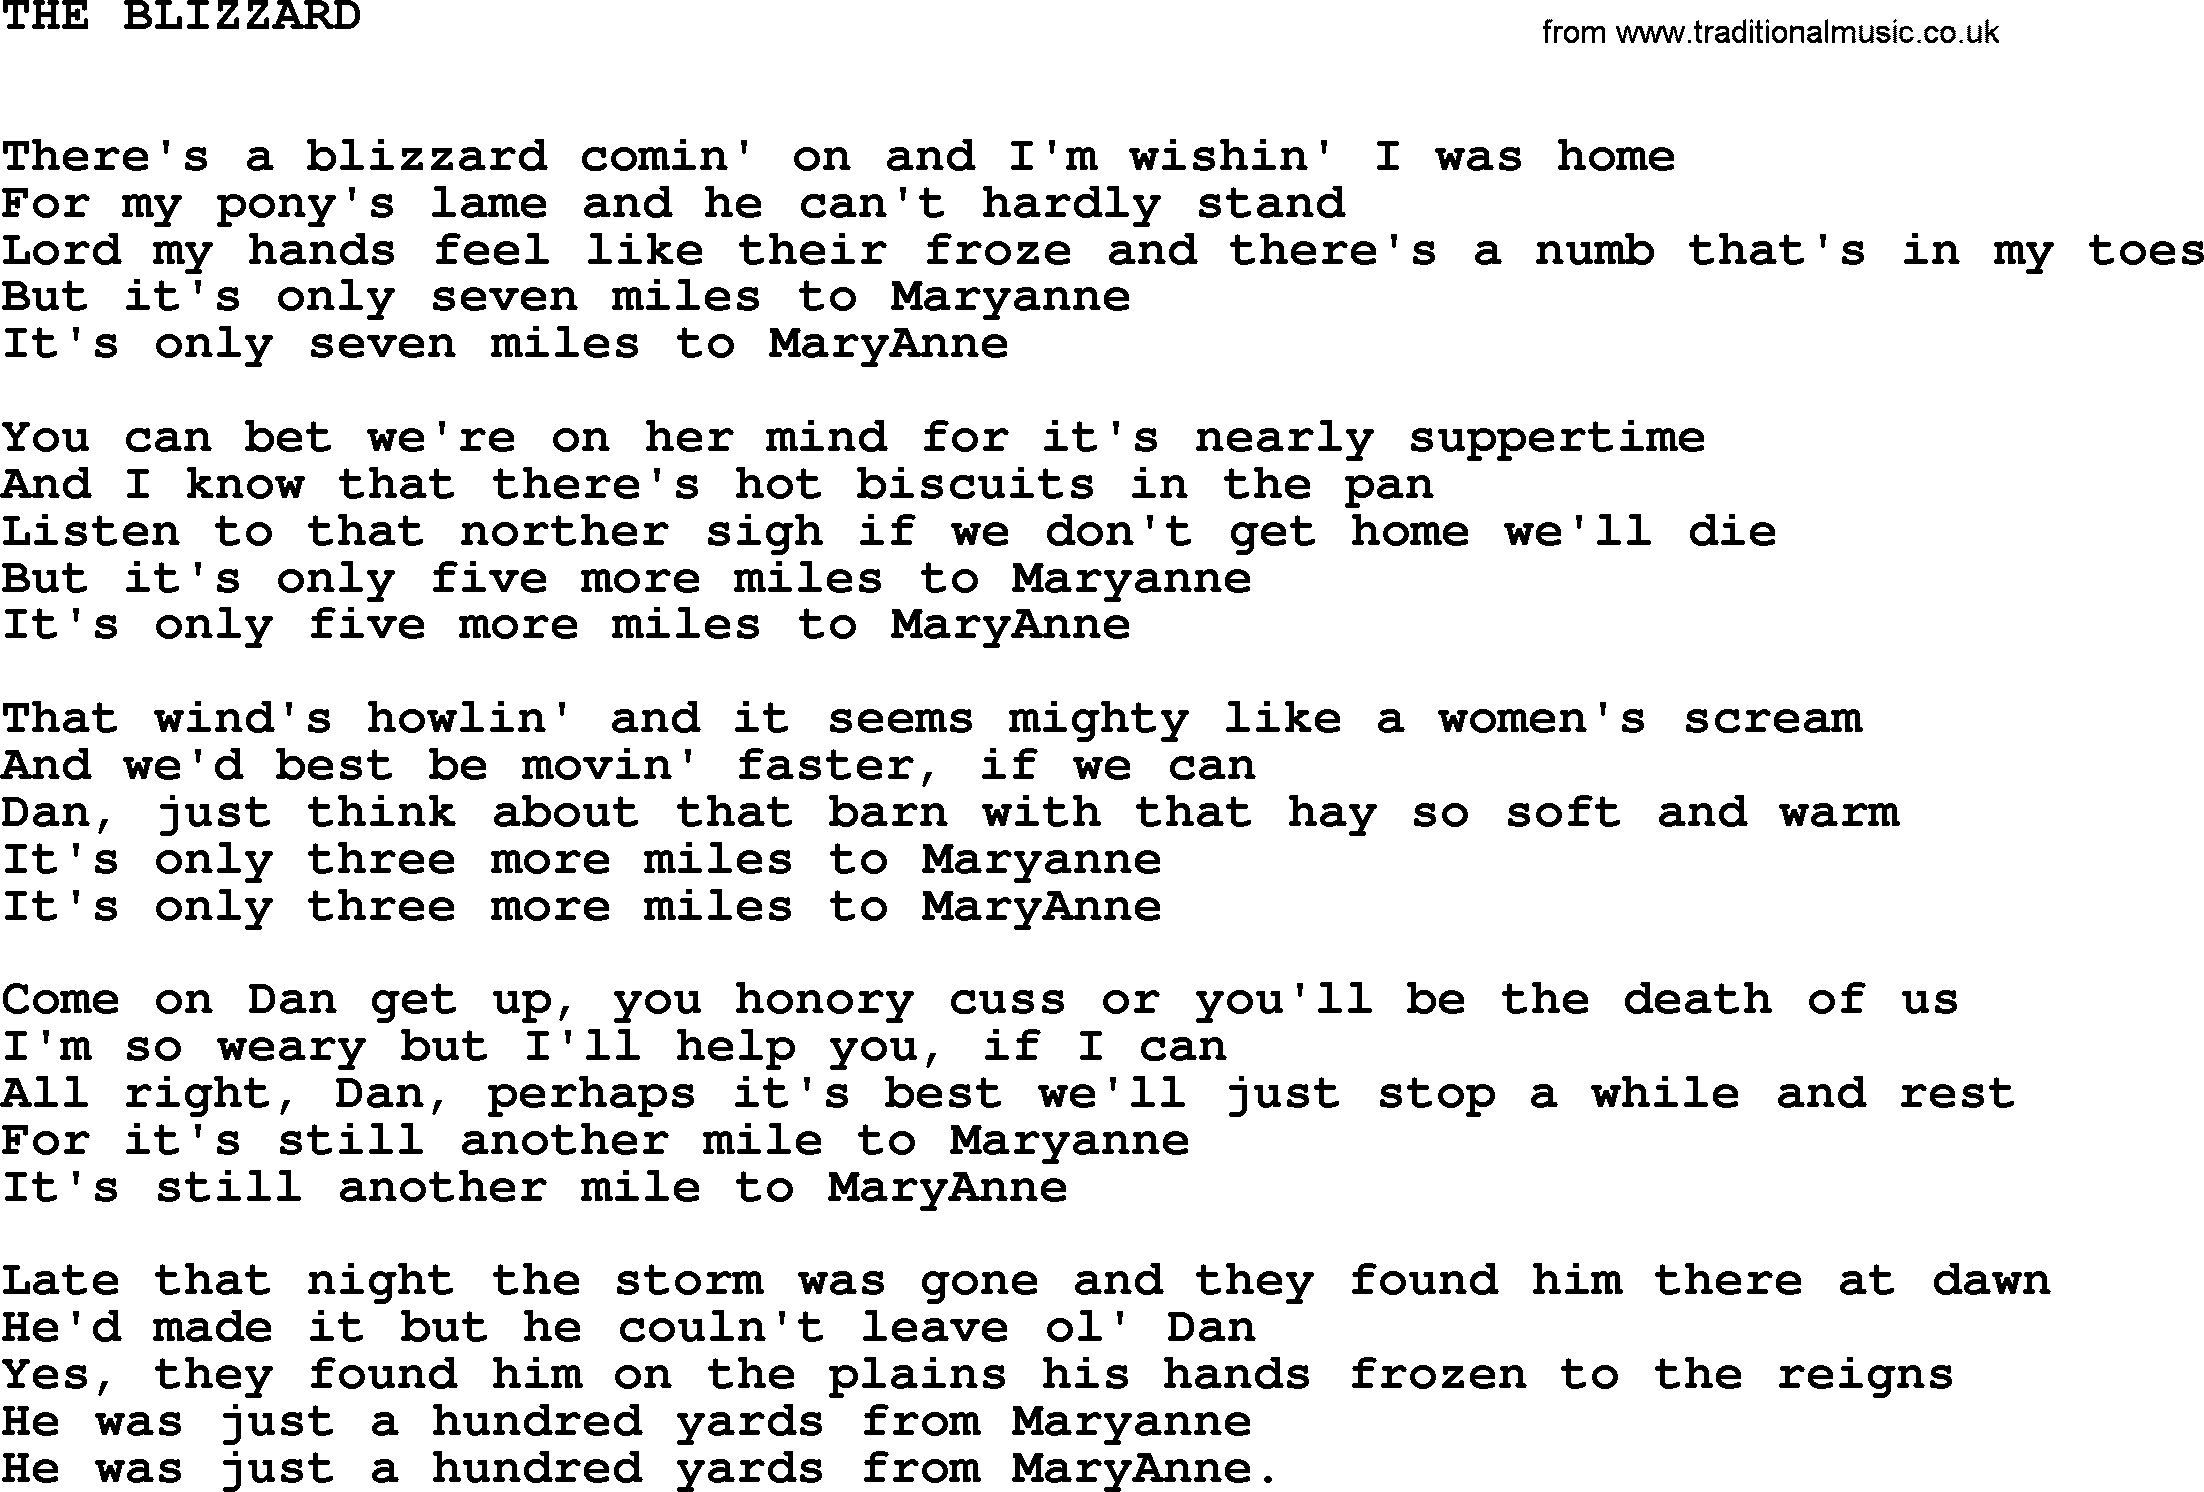 Johnny Cash song The Blizzard.txt lyrics